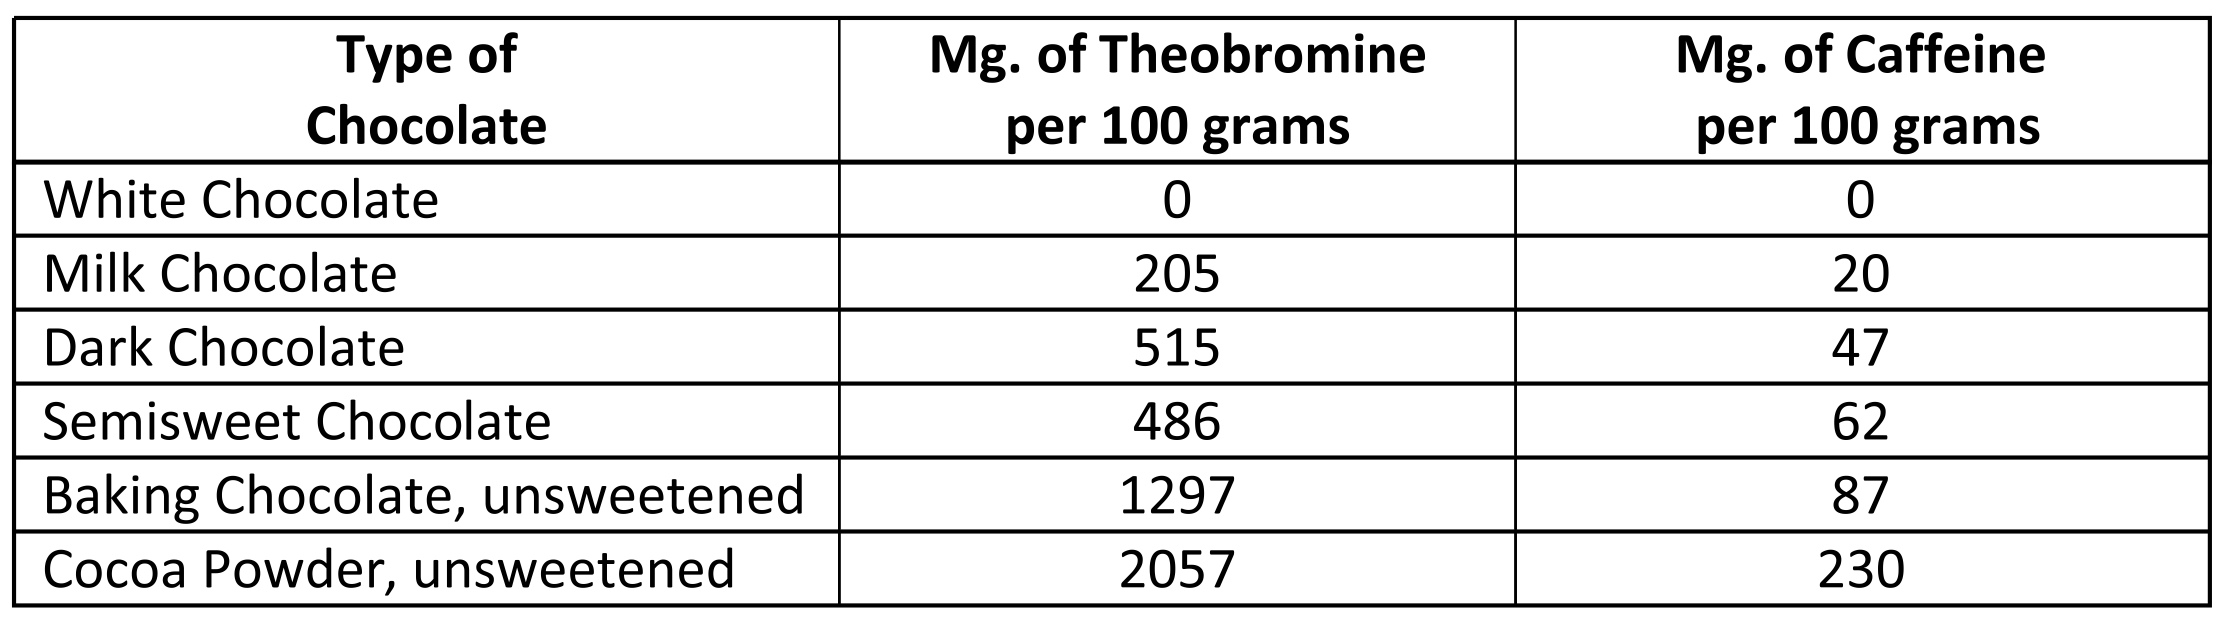 Theobromine and Caffeine content of Chocolates